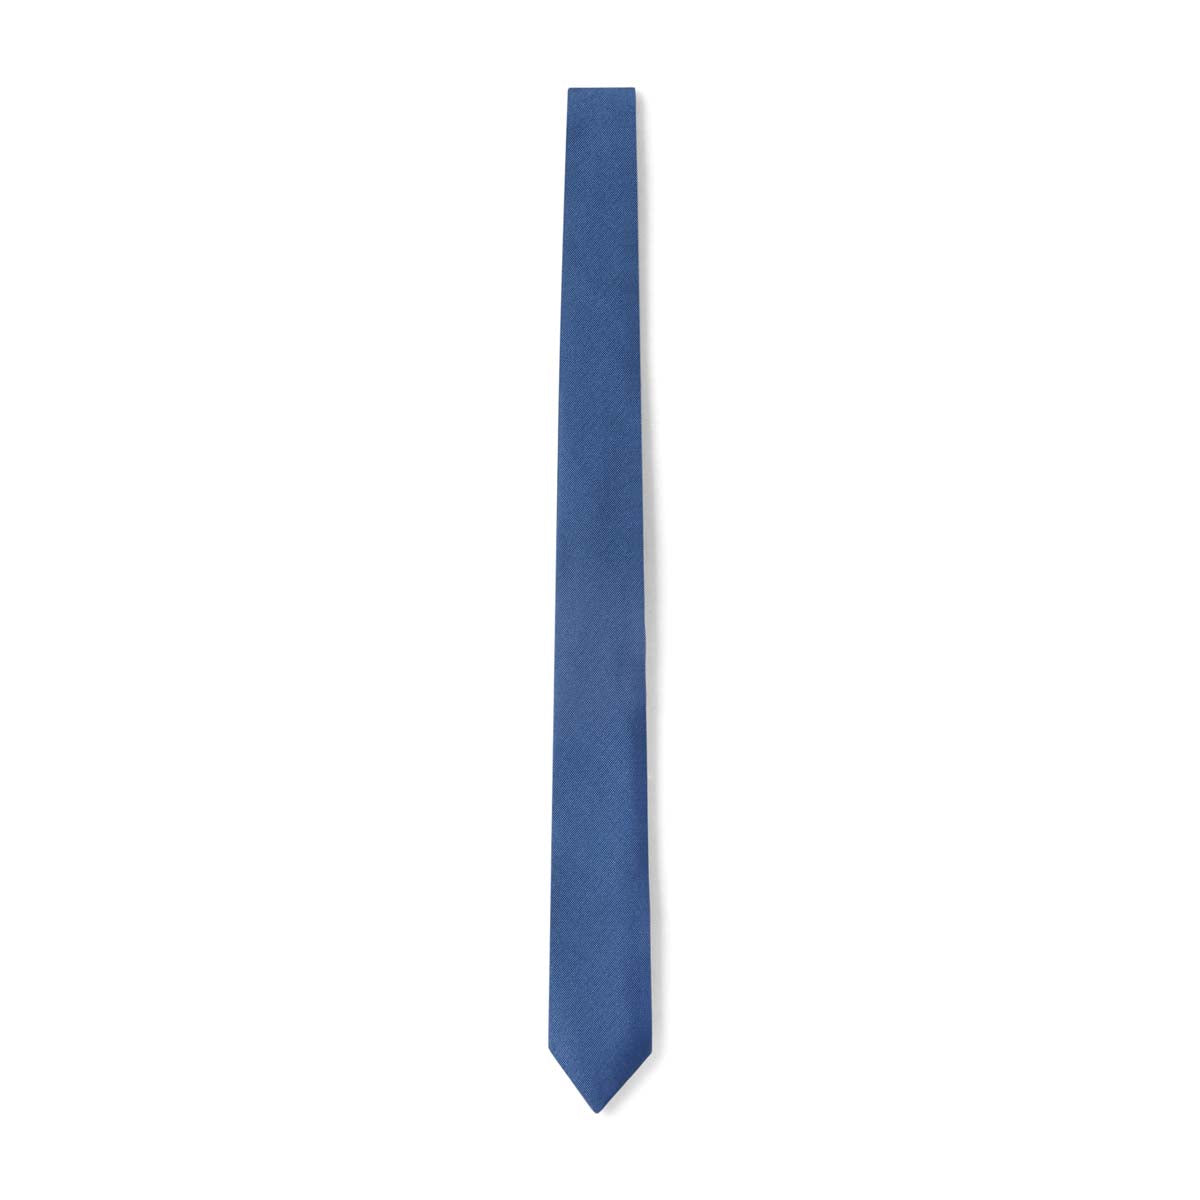 Cravate fine twill bleu foncé